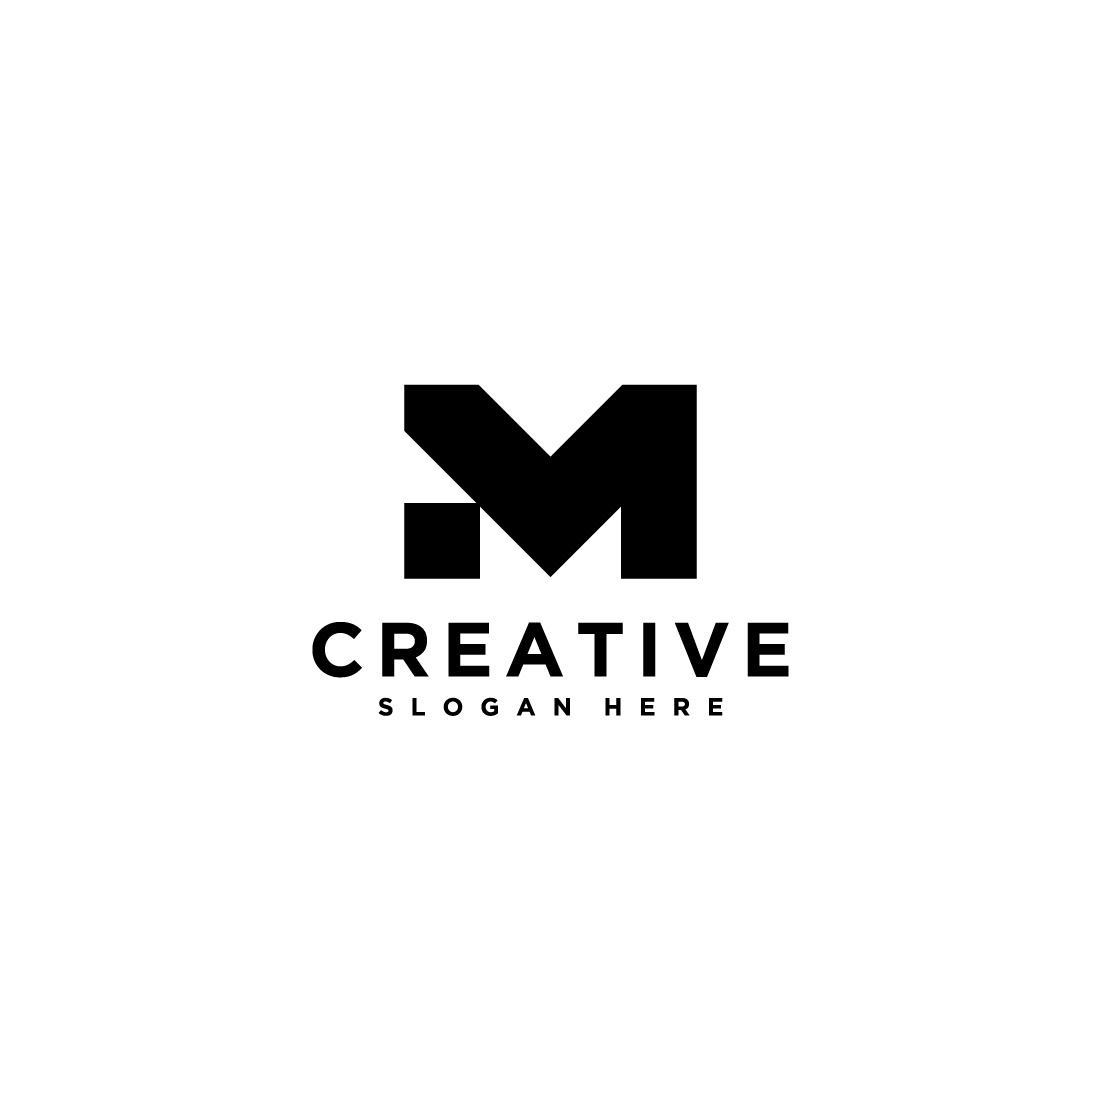 m letter logo design template cover image.